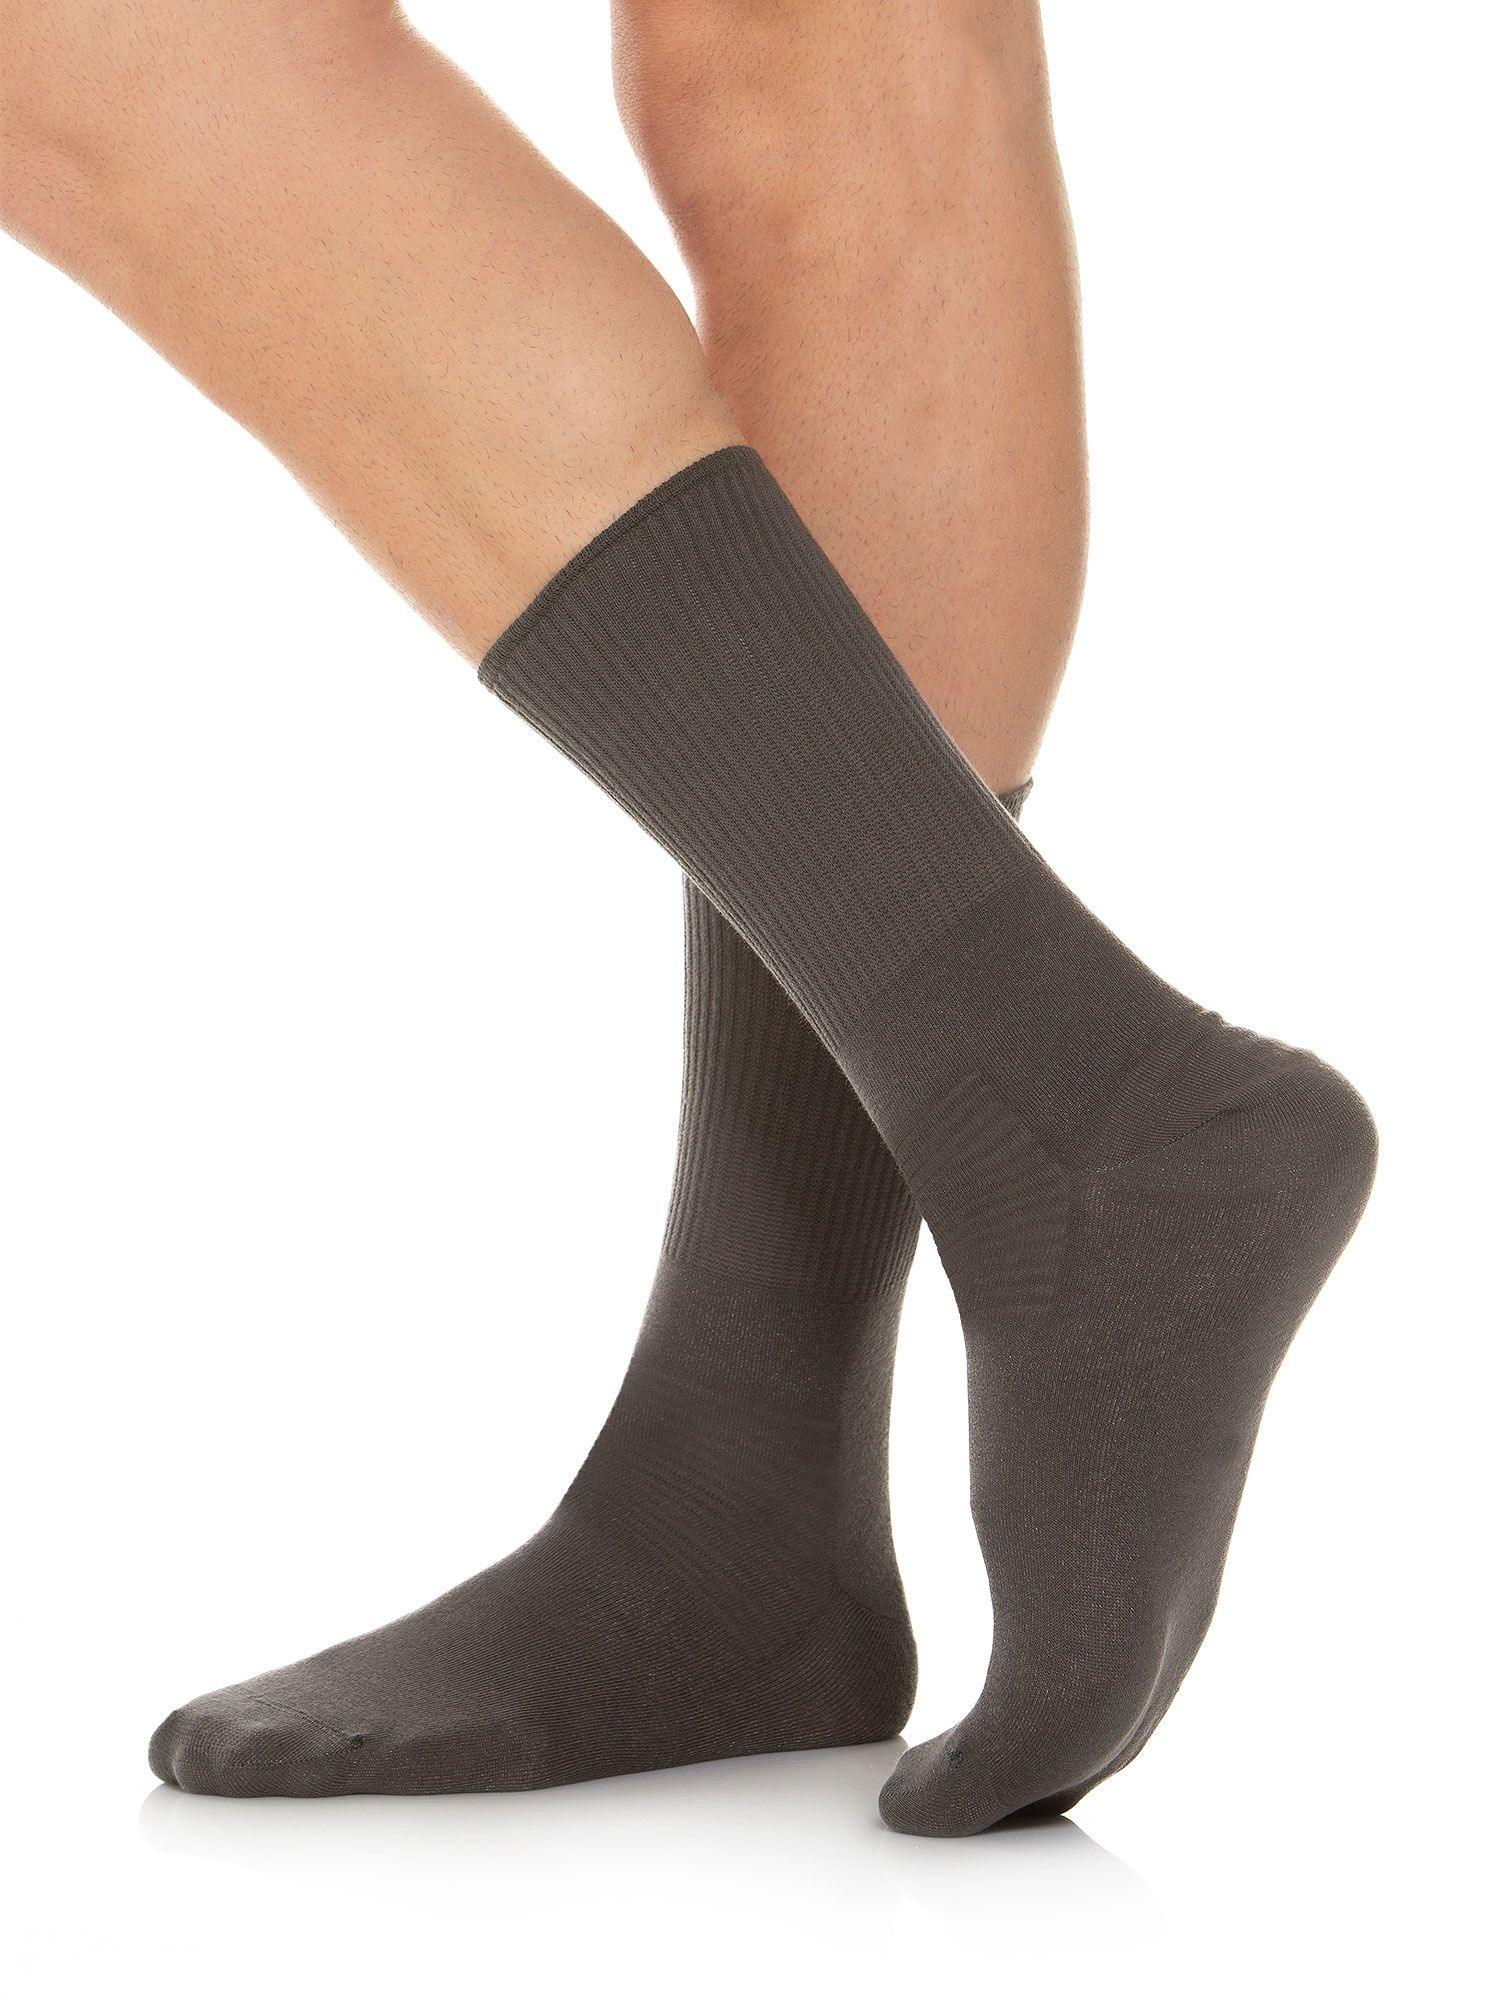 Diabetic socks with X-Static Silver fibre - Wellness Shoppee